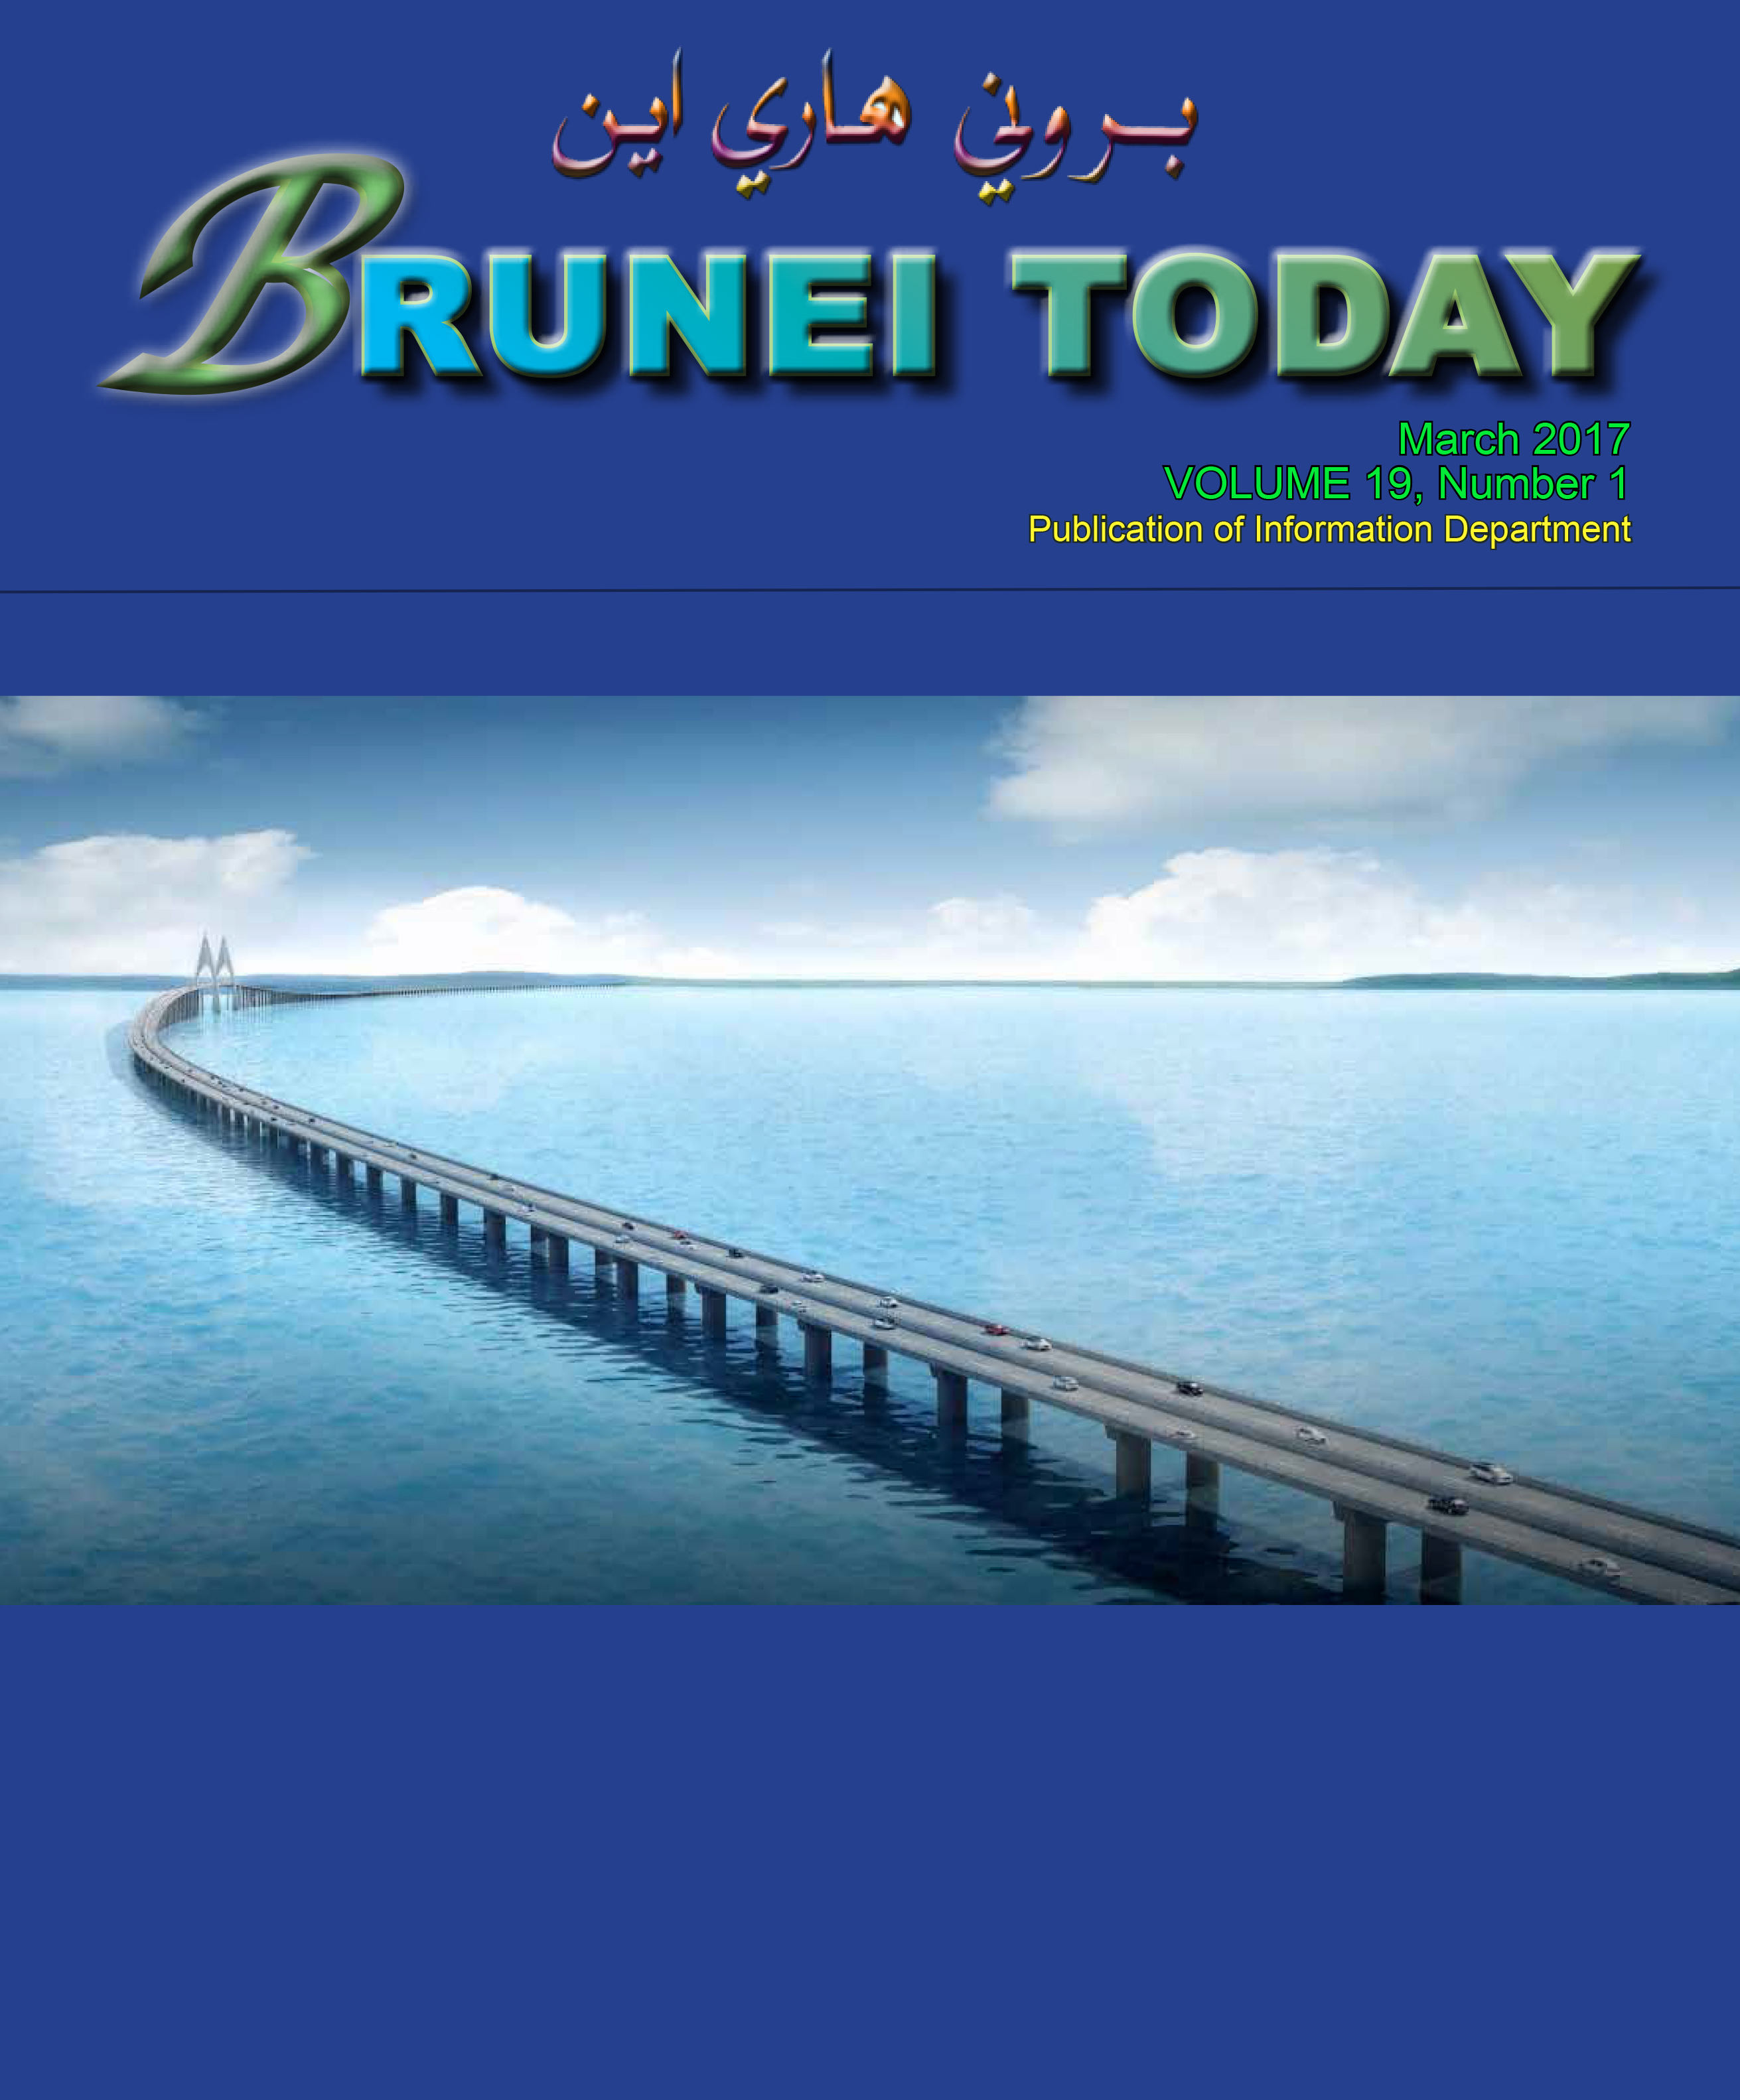 Brunei Today March 2017_140917-1.jpg